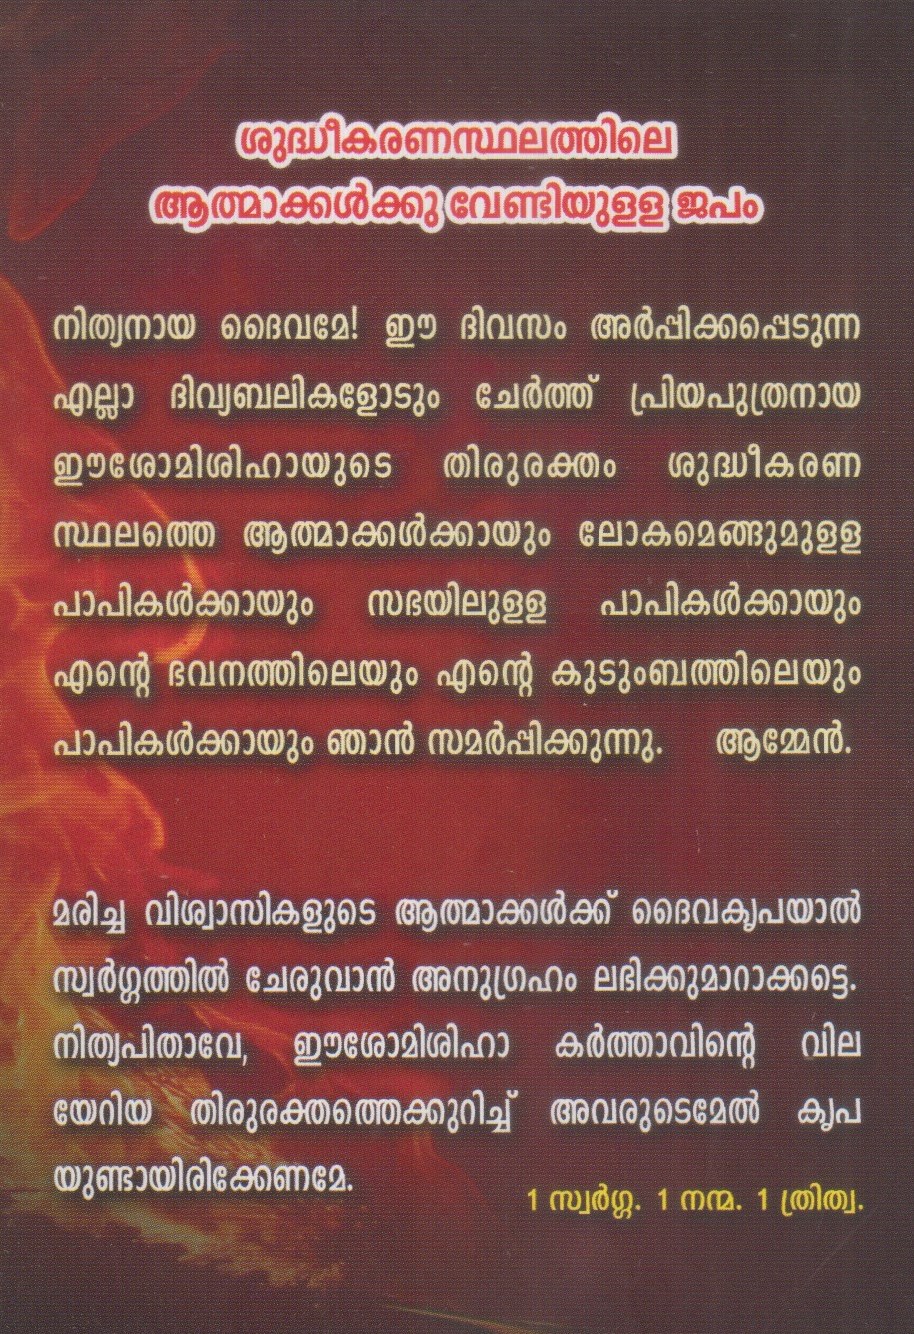 Prayer for the Souls in Purgatory (Malayalam)